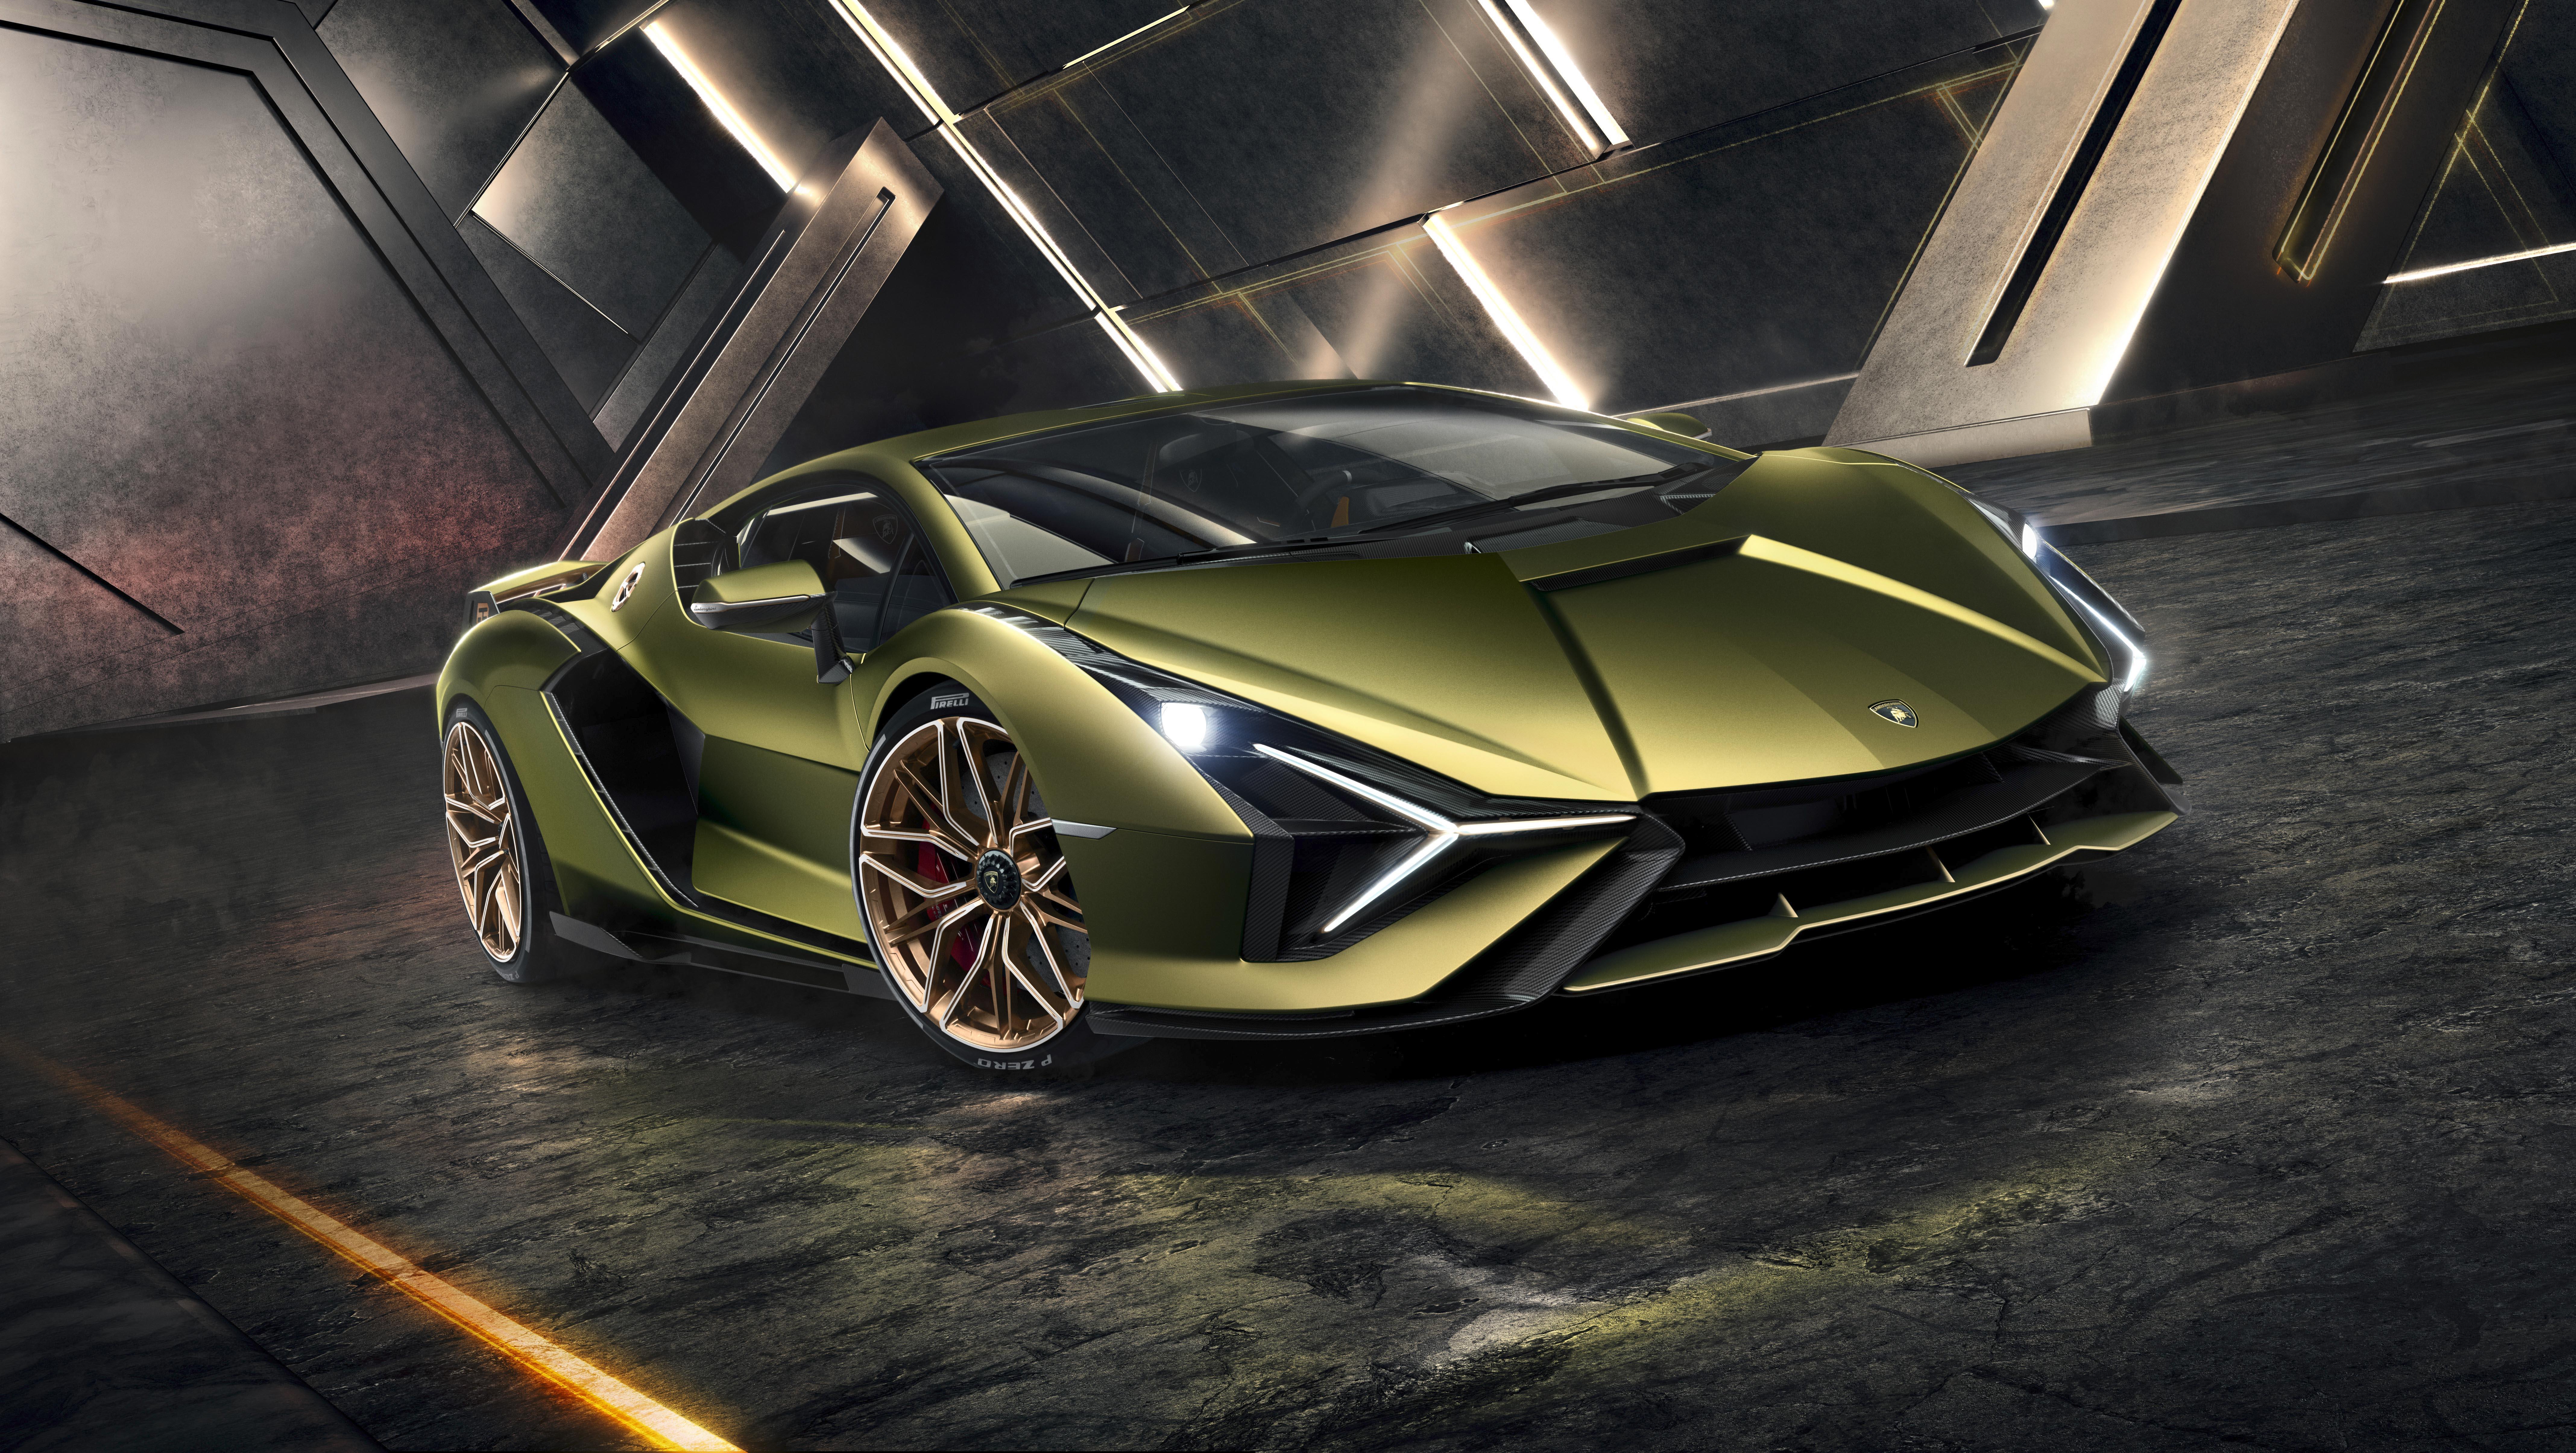 Lamborghini reveals its first hybrid supercar: The Sian